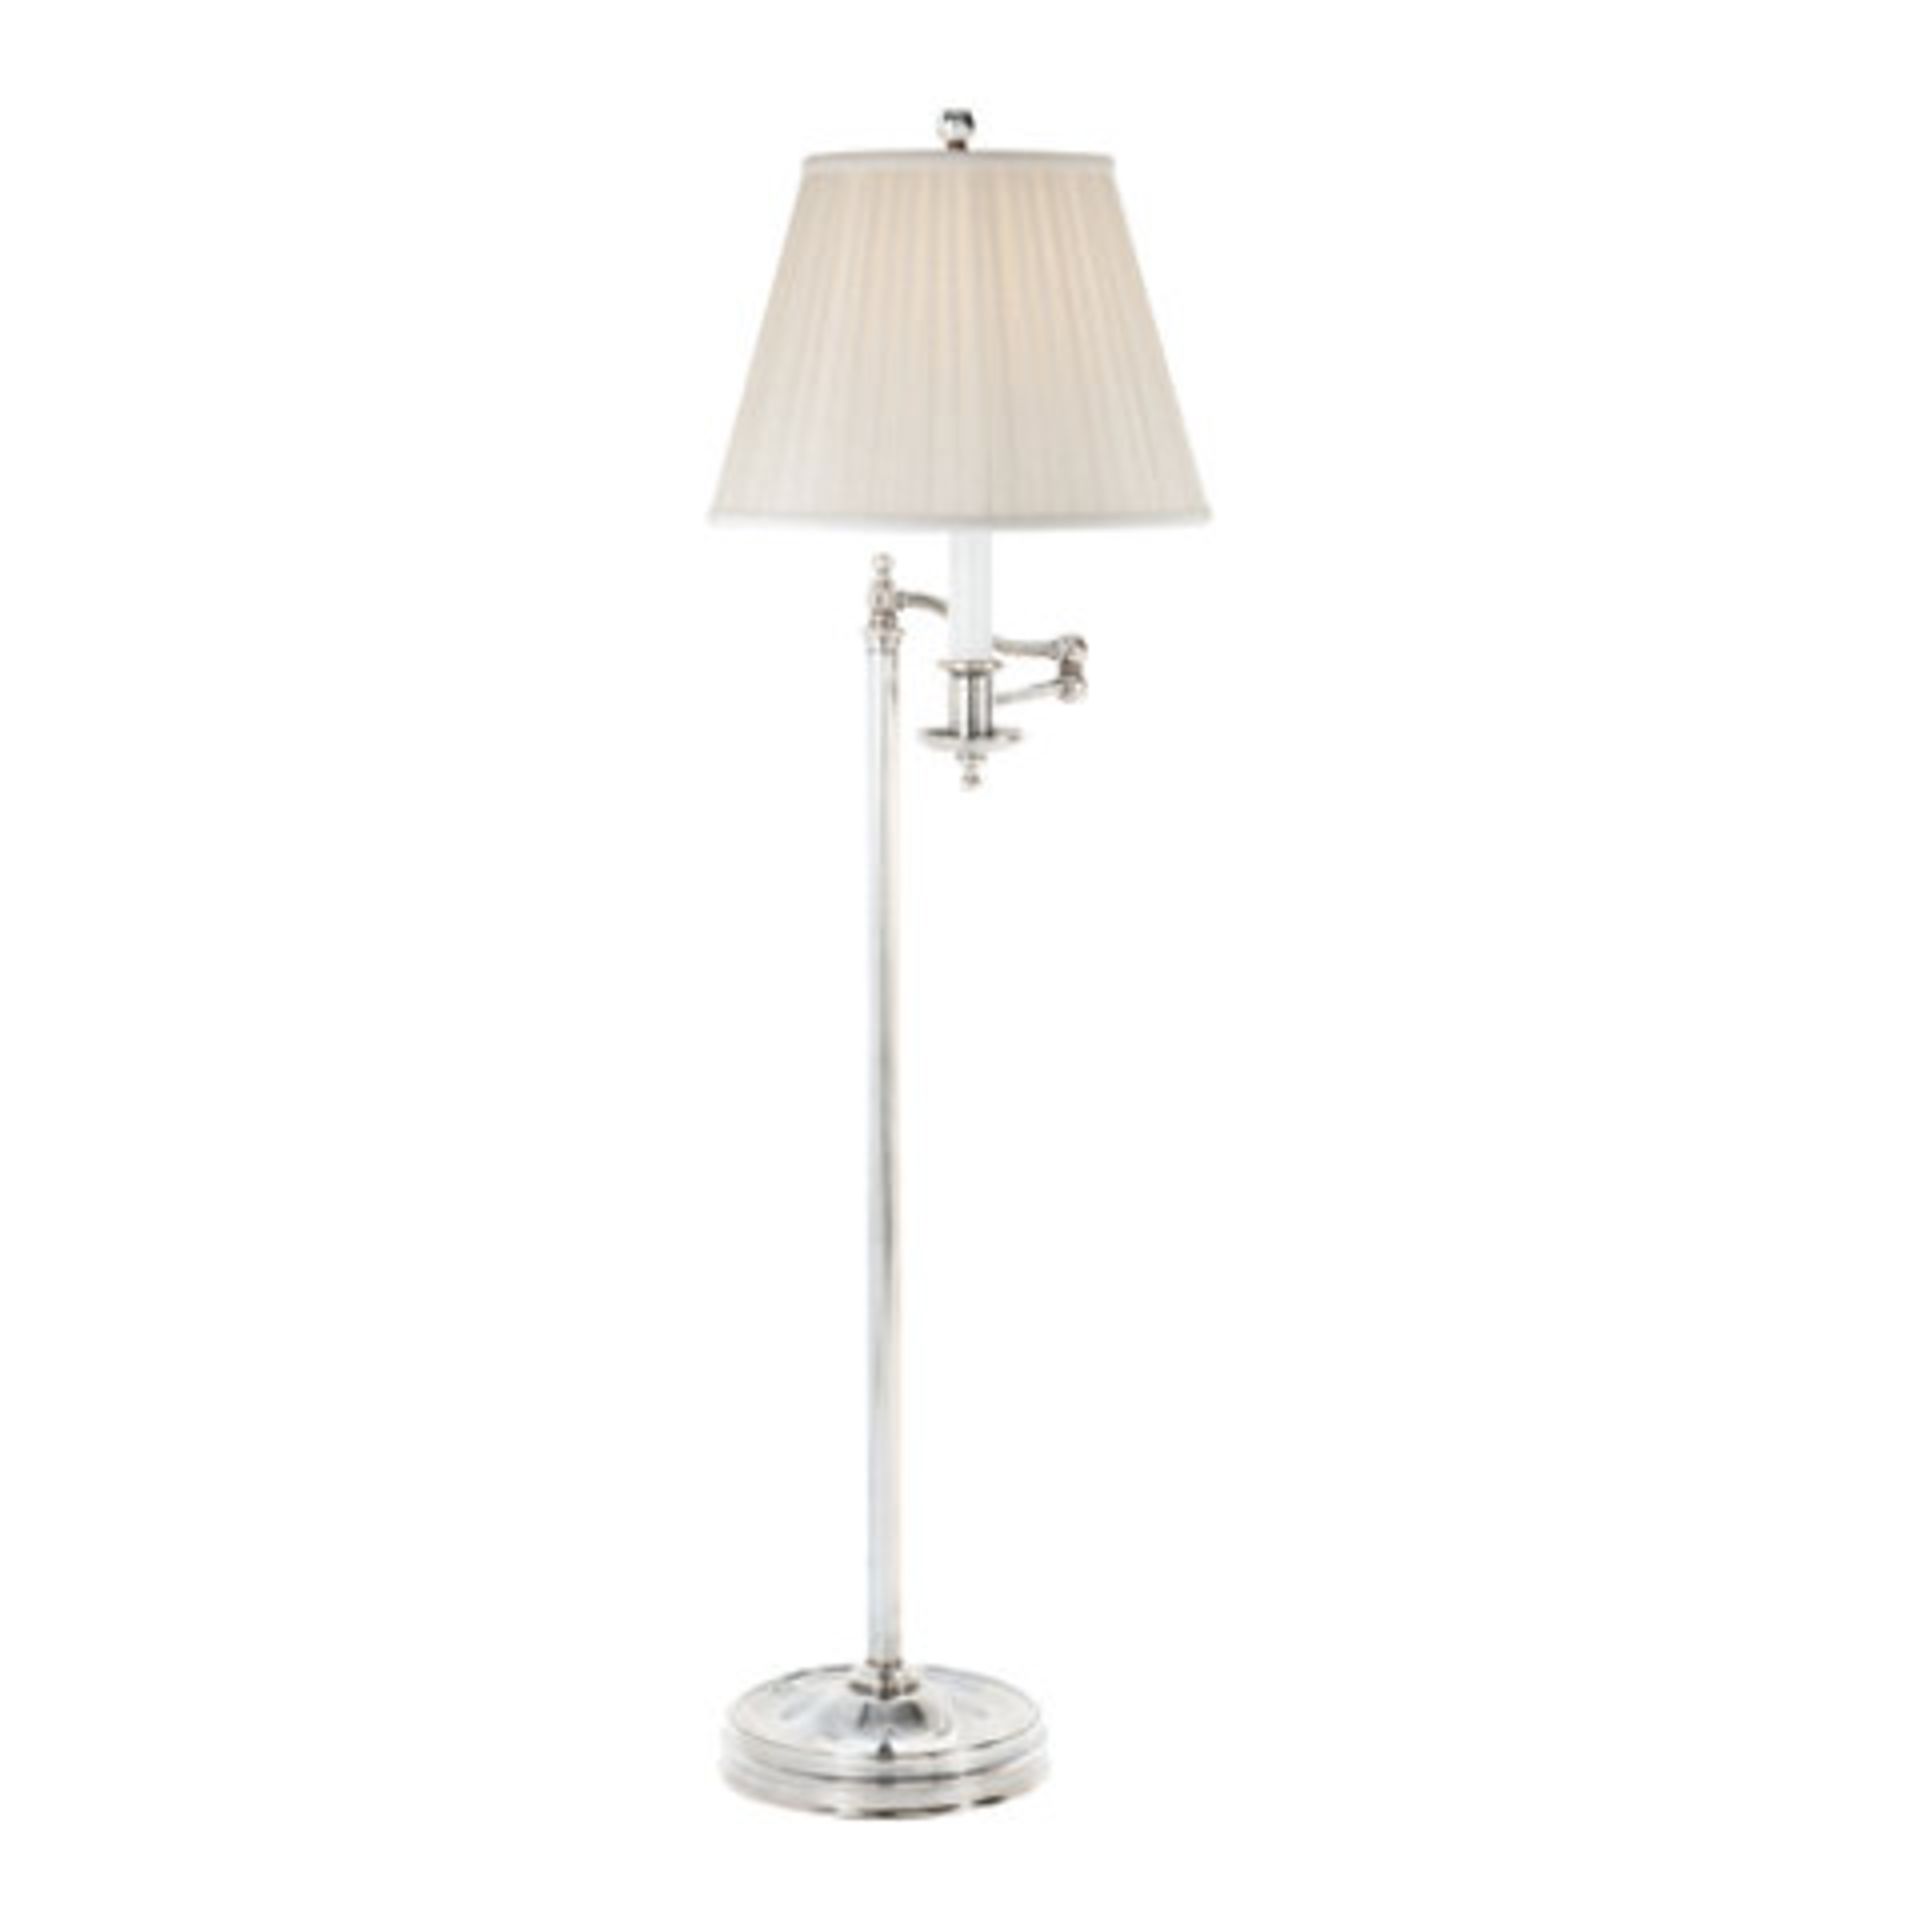 1 x Ralph Lauren Stockton Swing Arm Floor Lamp in Polished Silver - CL087- Model: RL11092 -